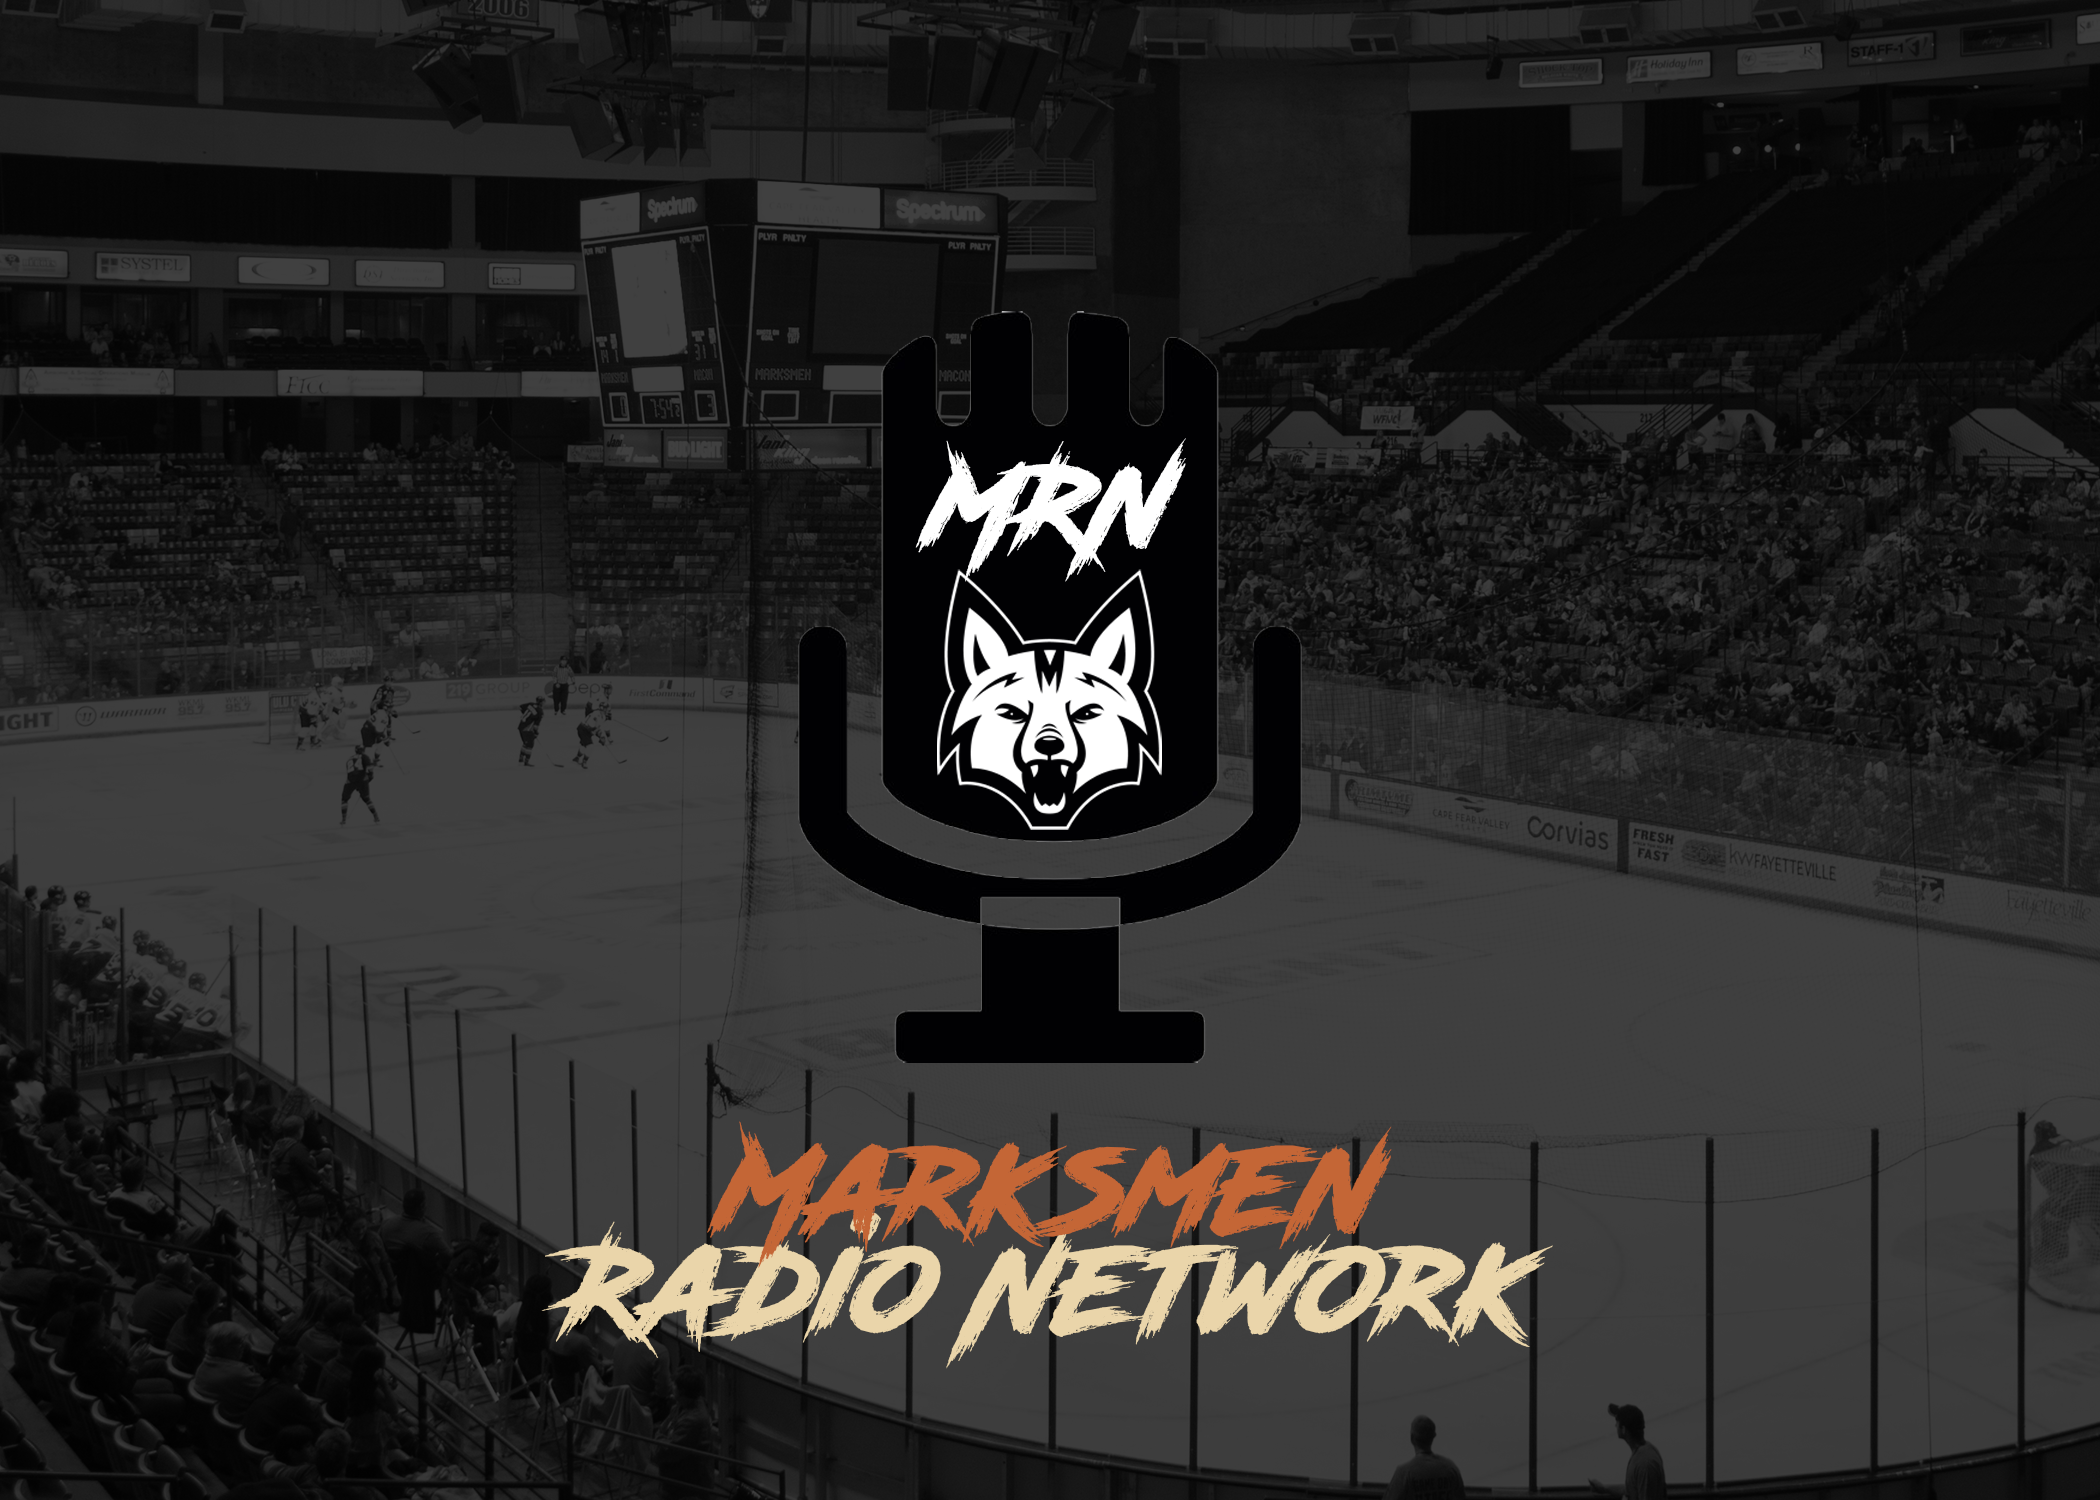 Introducing the Marksmen Radio Network